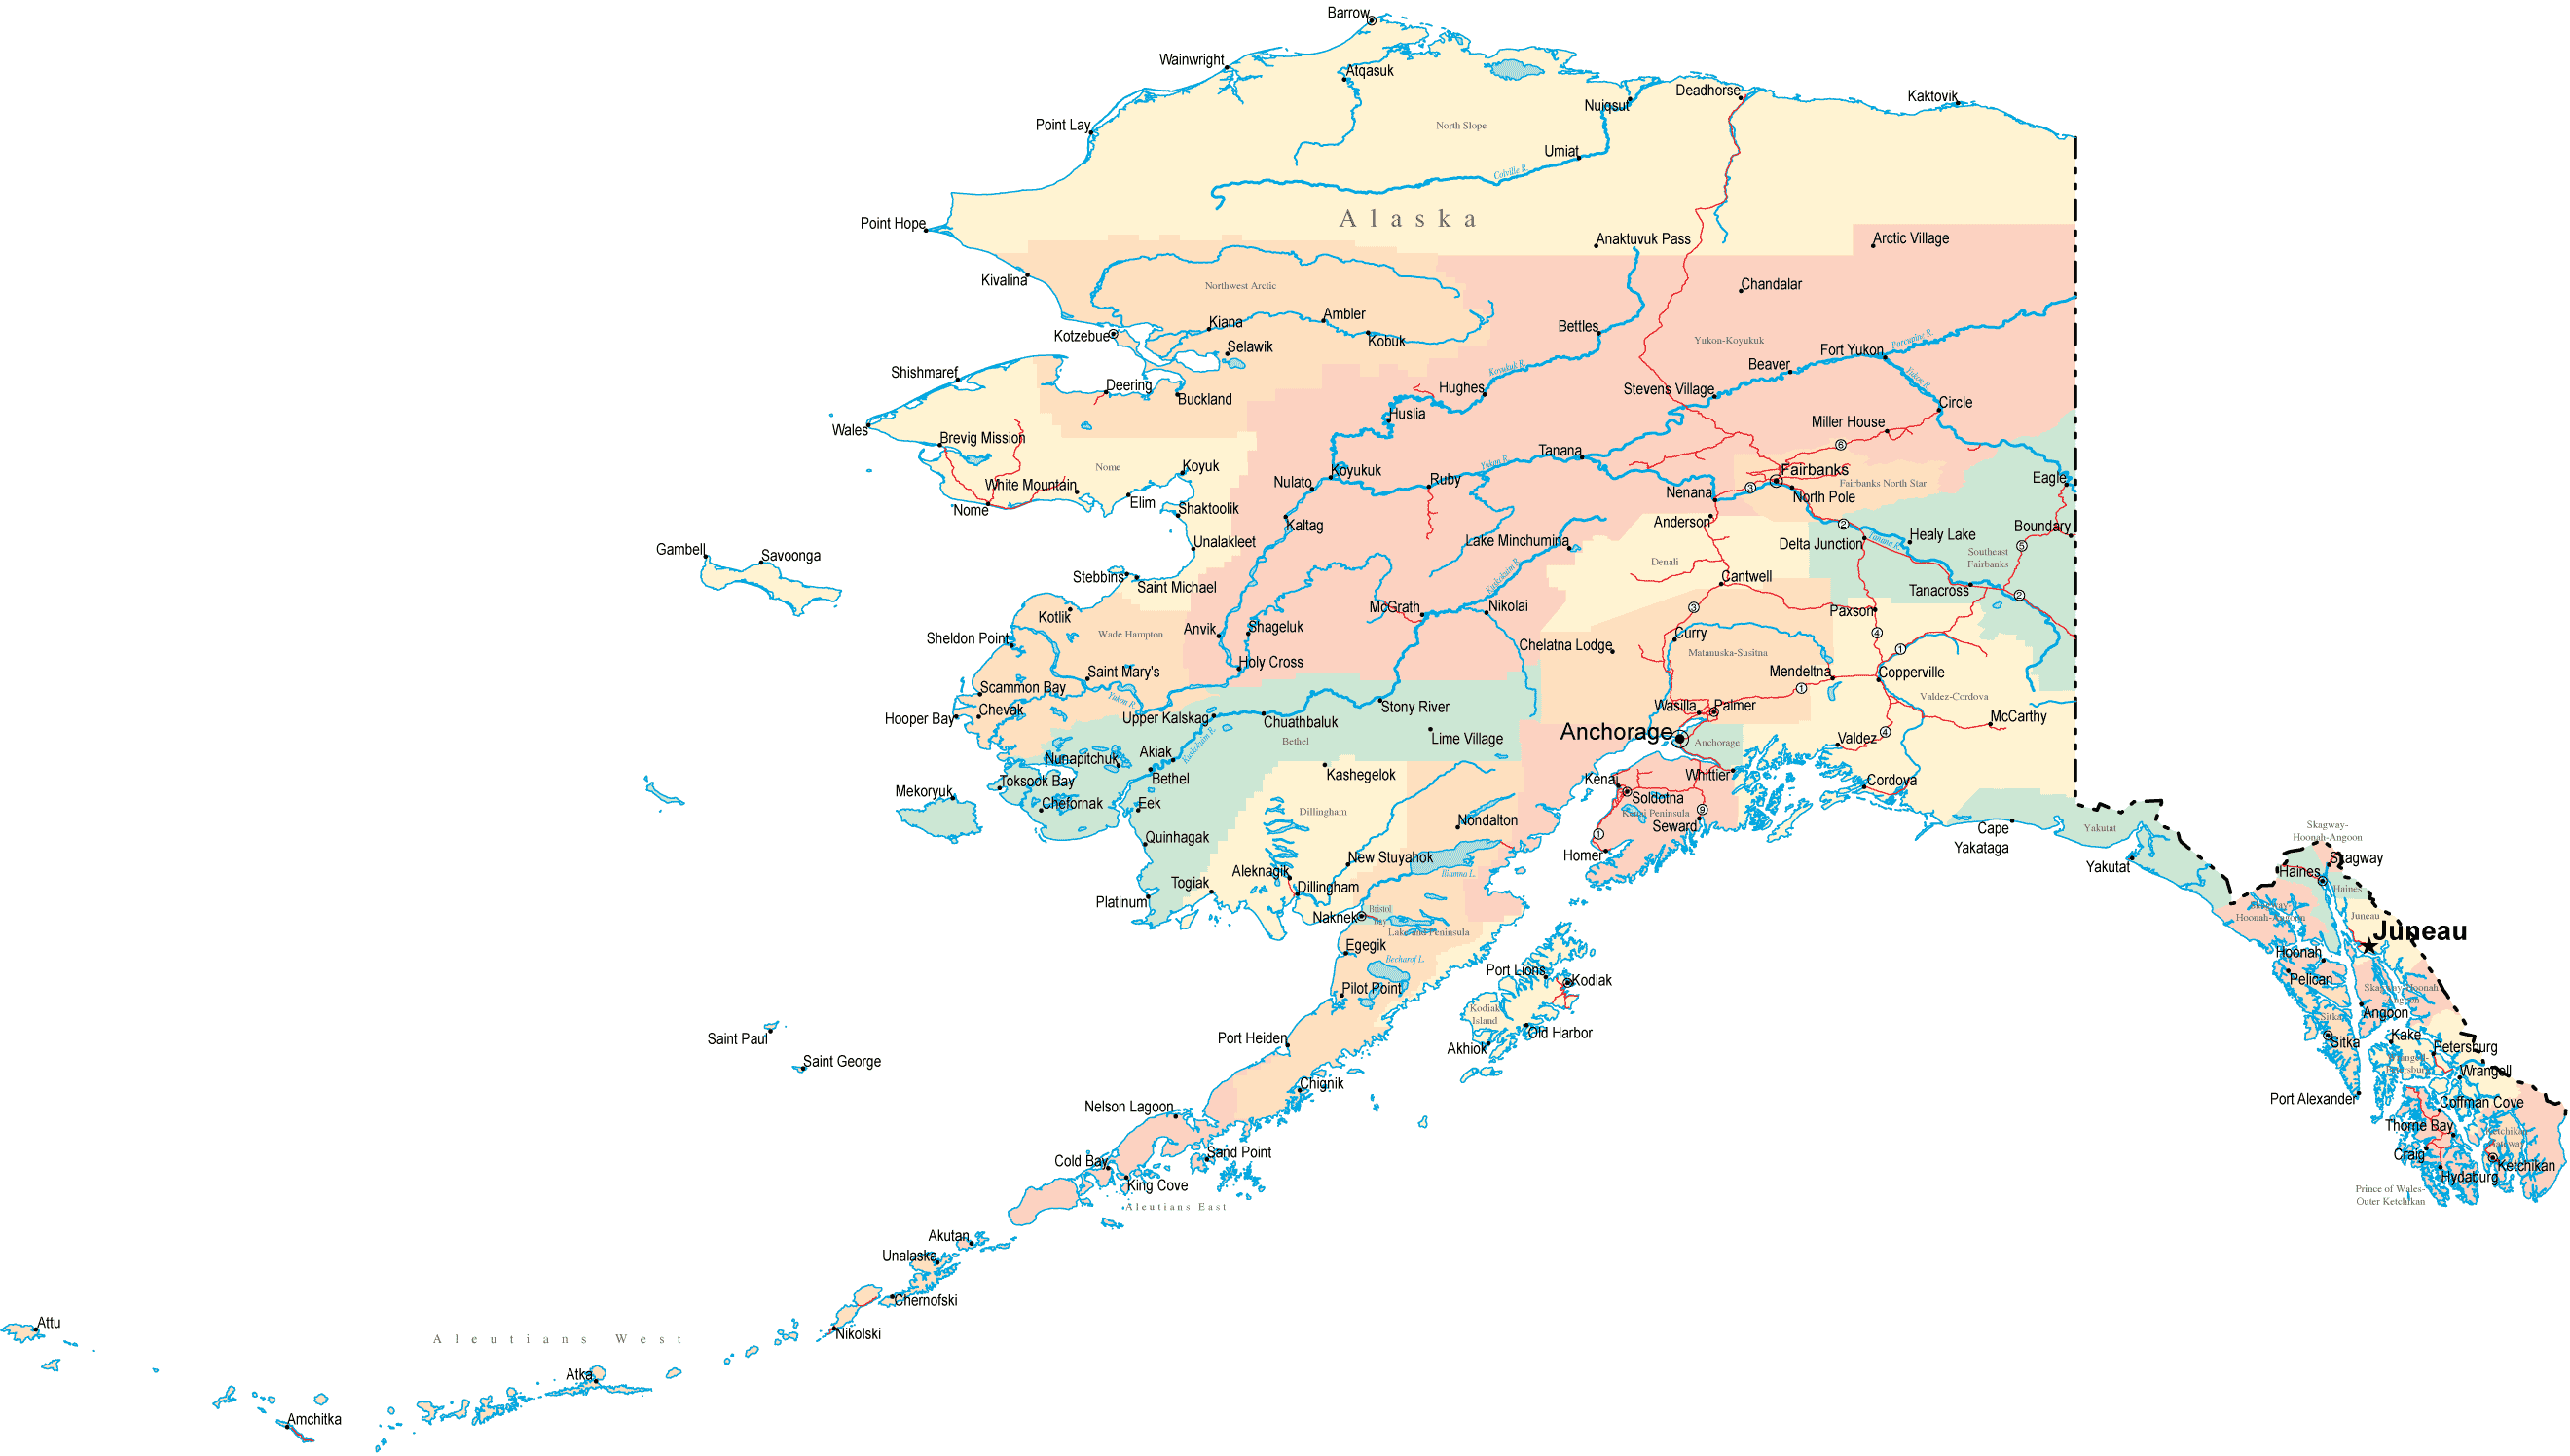 Alaska State Resources